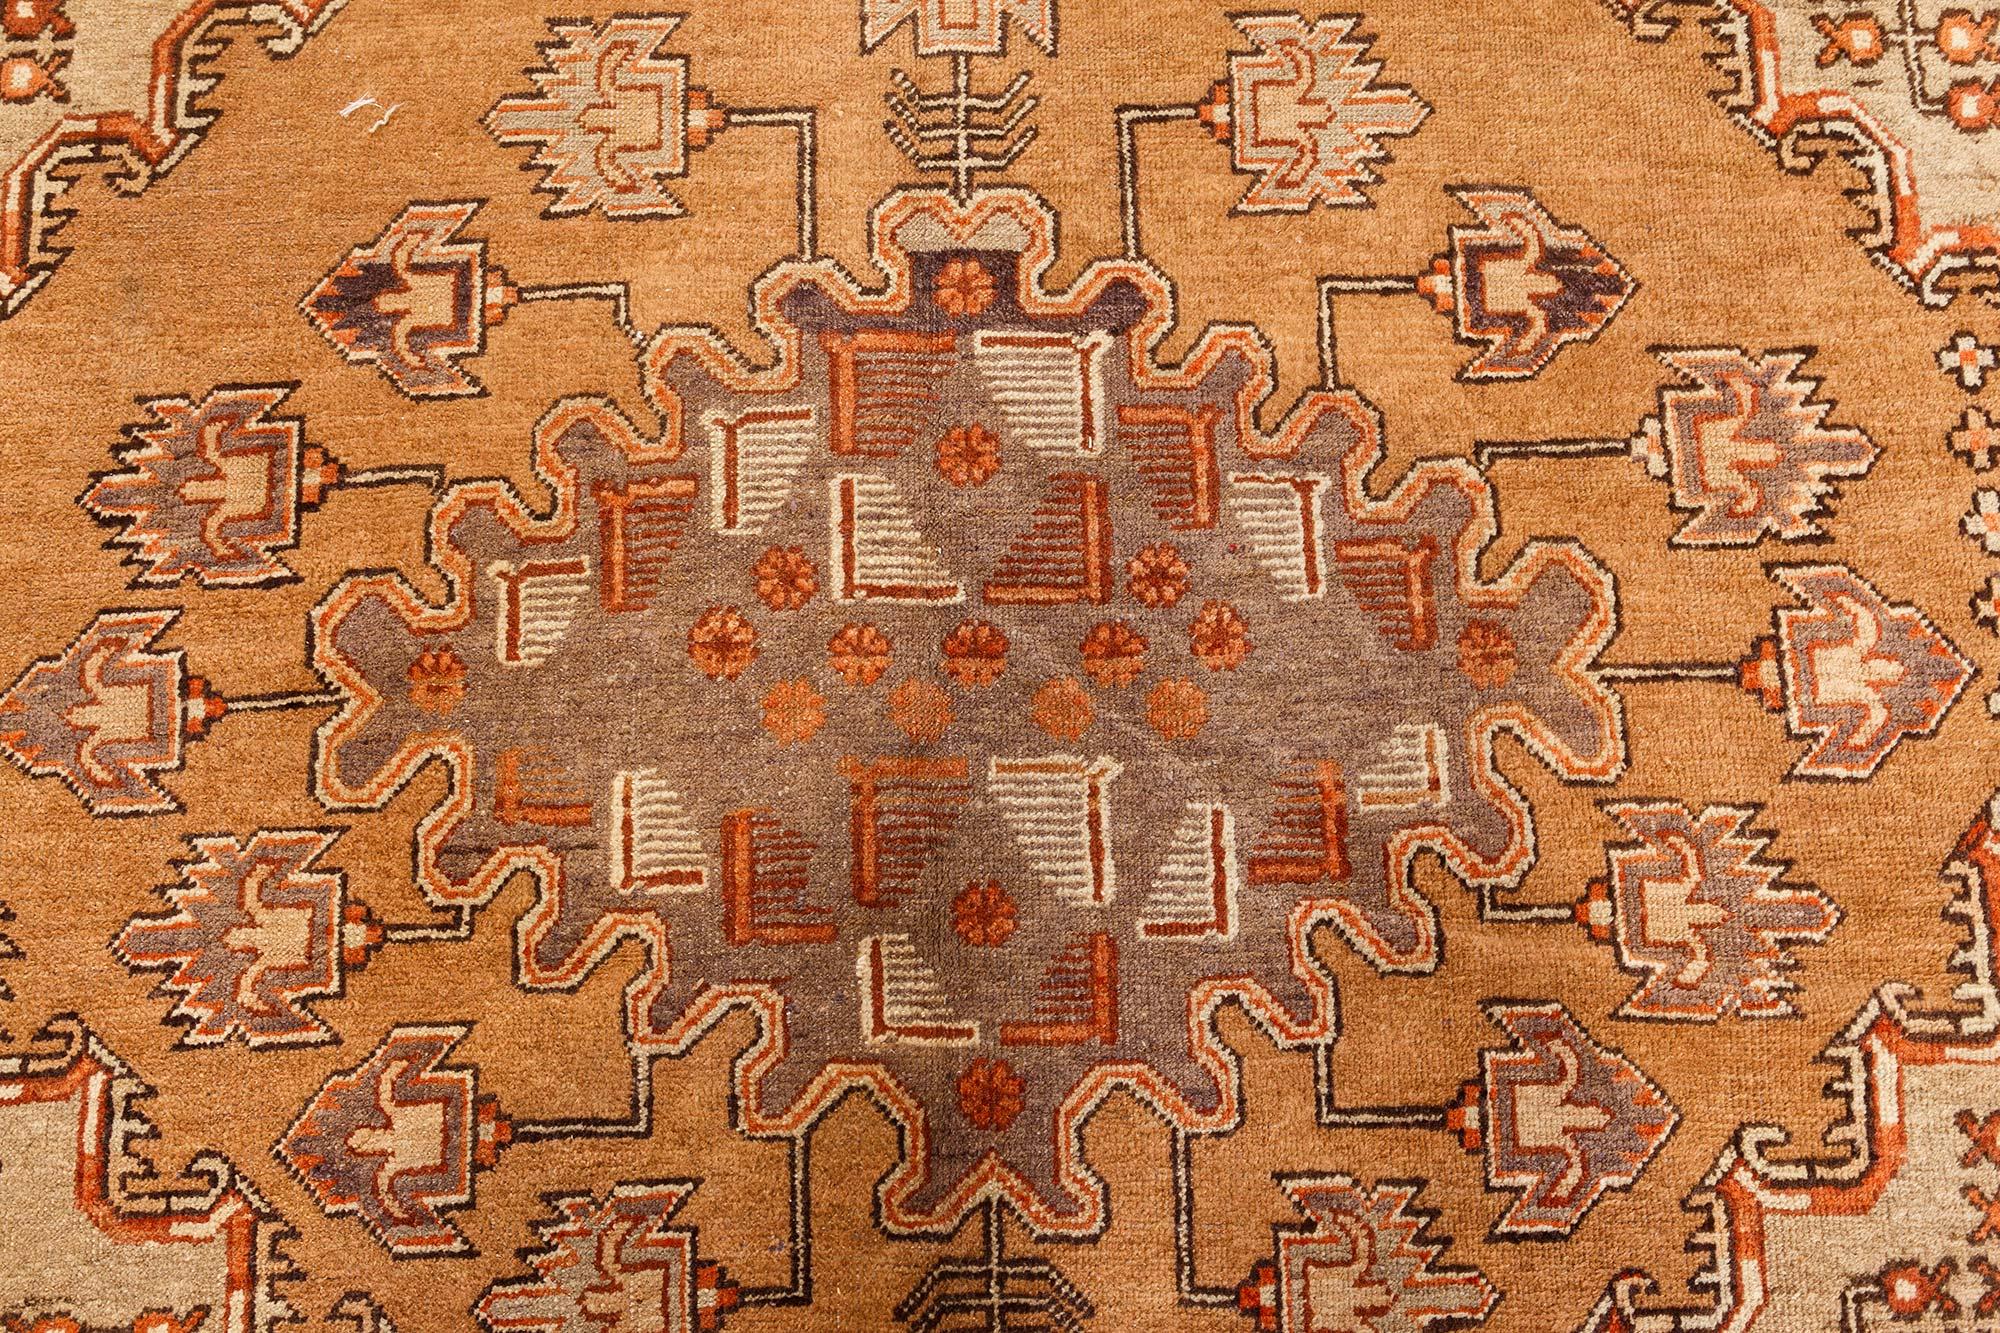 Vintage Samarkand (Khotan) carpet
Size: 6'7